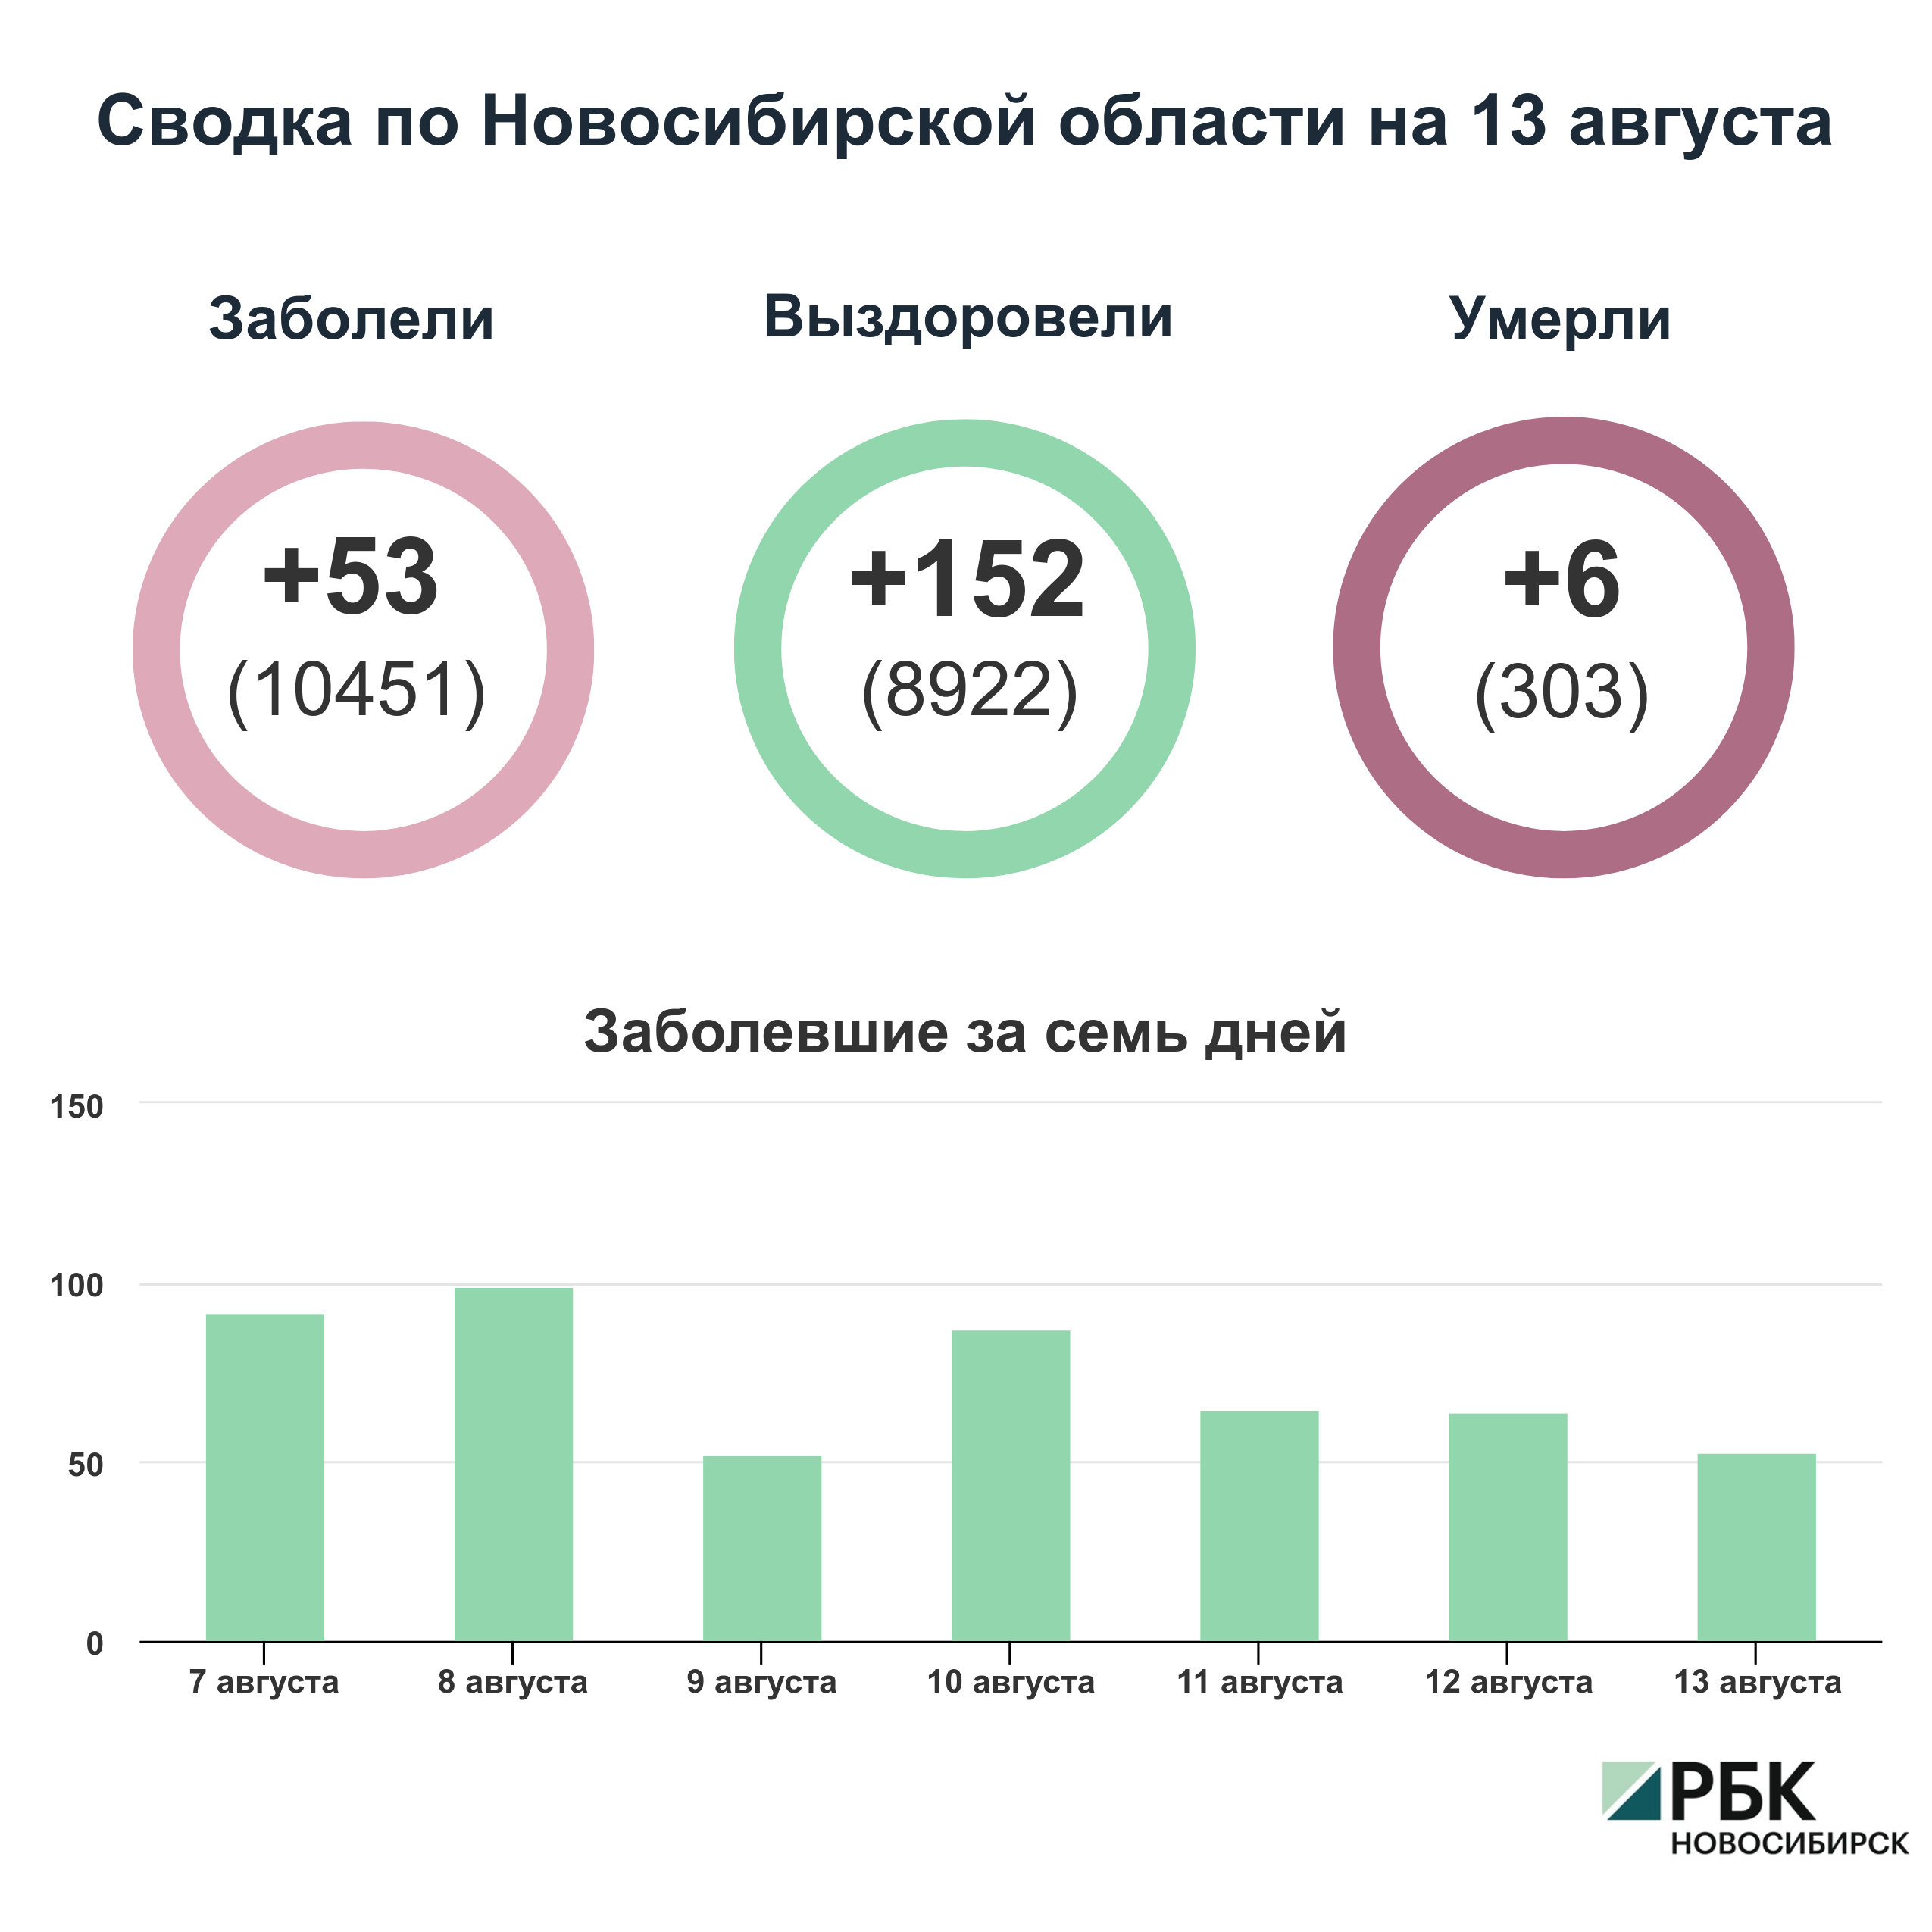 Коронавирус в Новосибирске: сводка на 13 августа